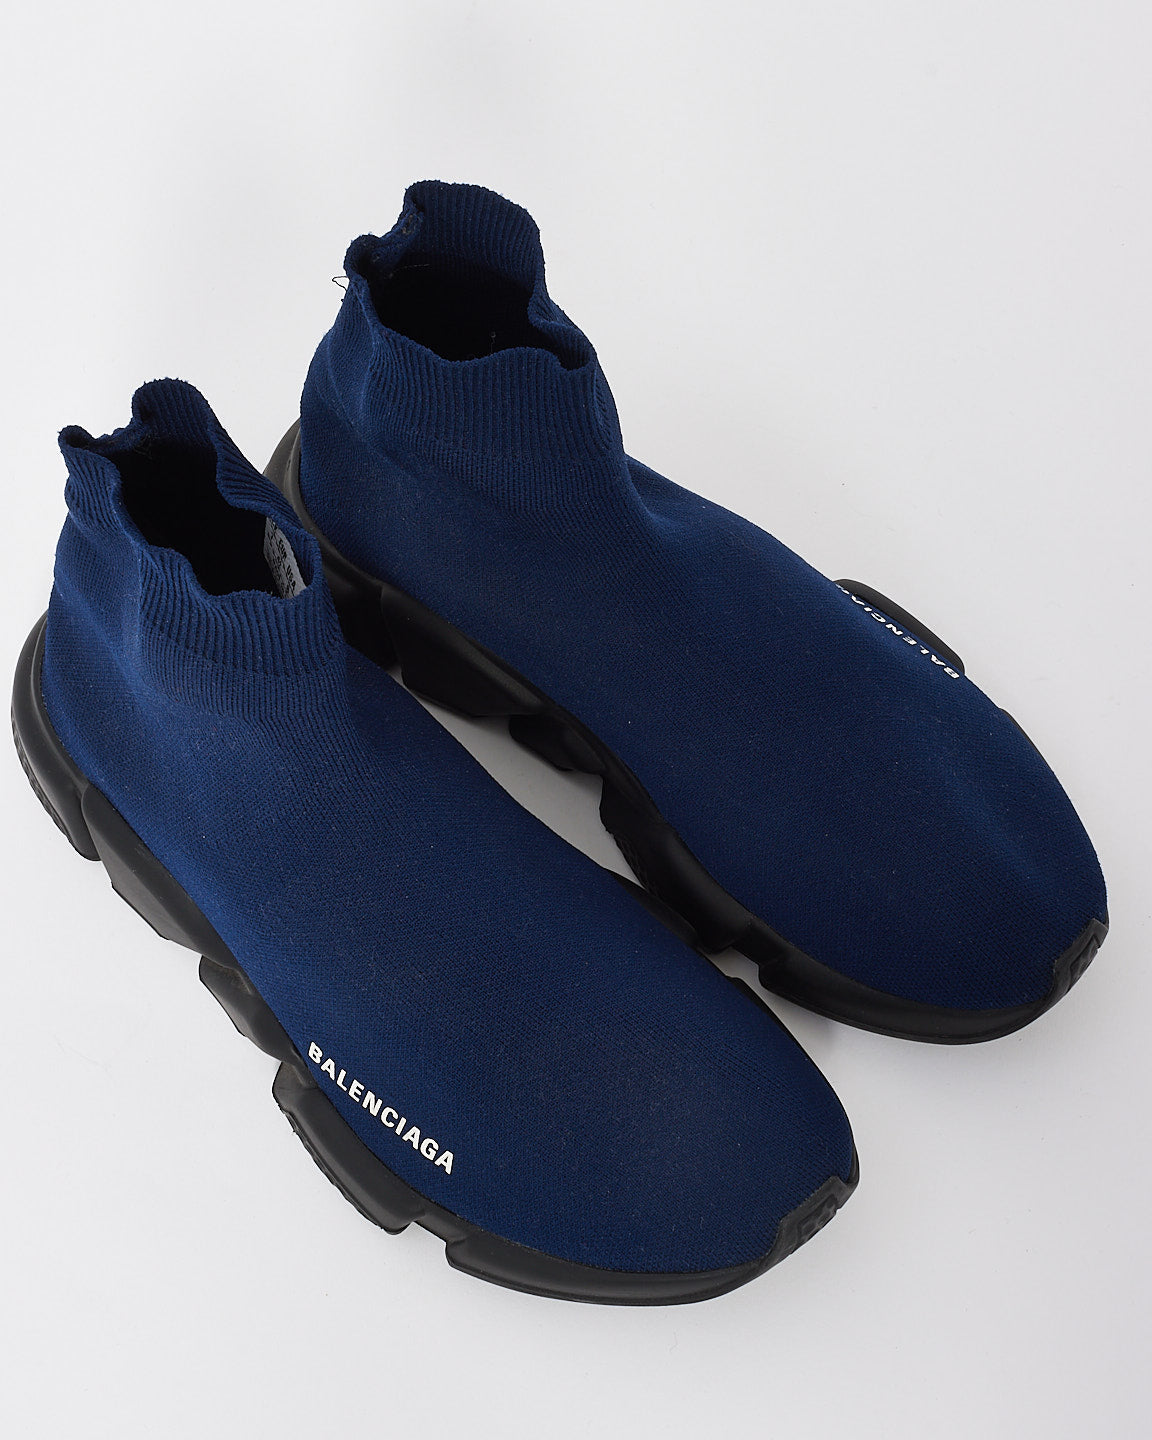 Balenciaga Blue Fabric Sock Speed Sneakers - 41